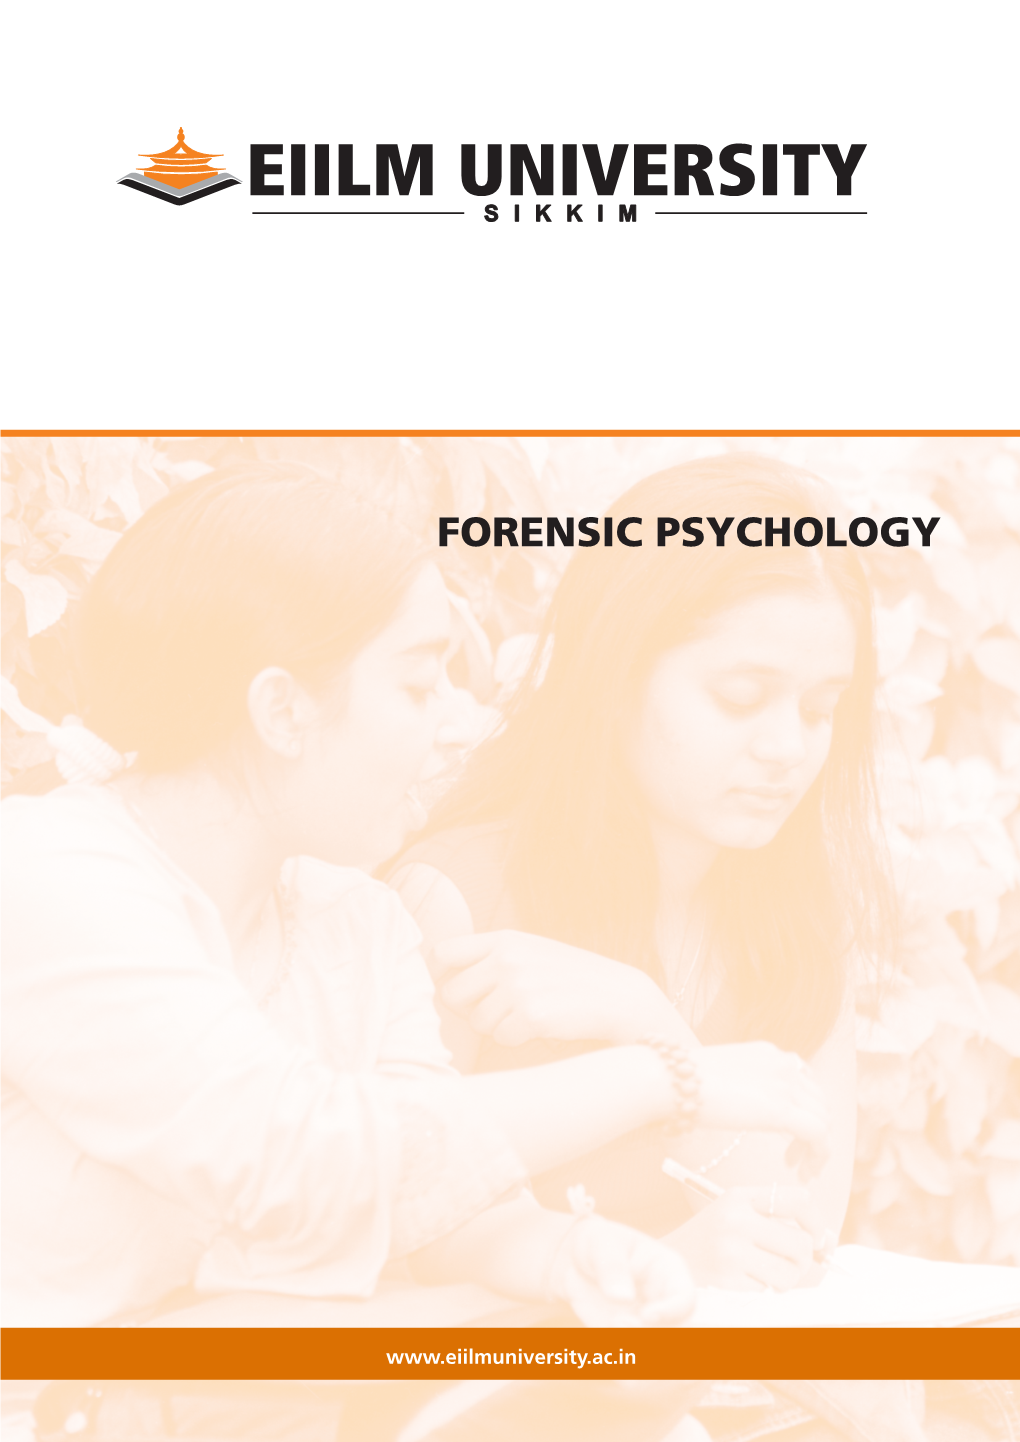 FORENSIC PSYCHOLOGY Credits: 4